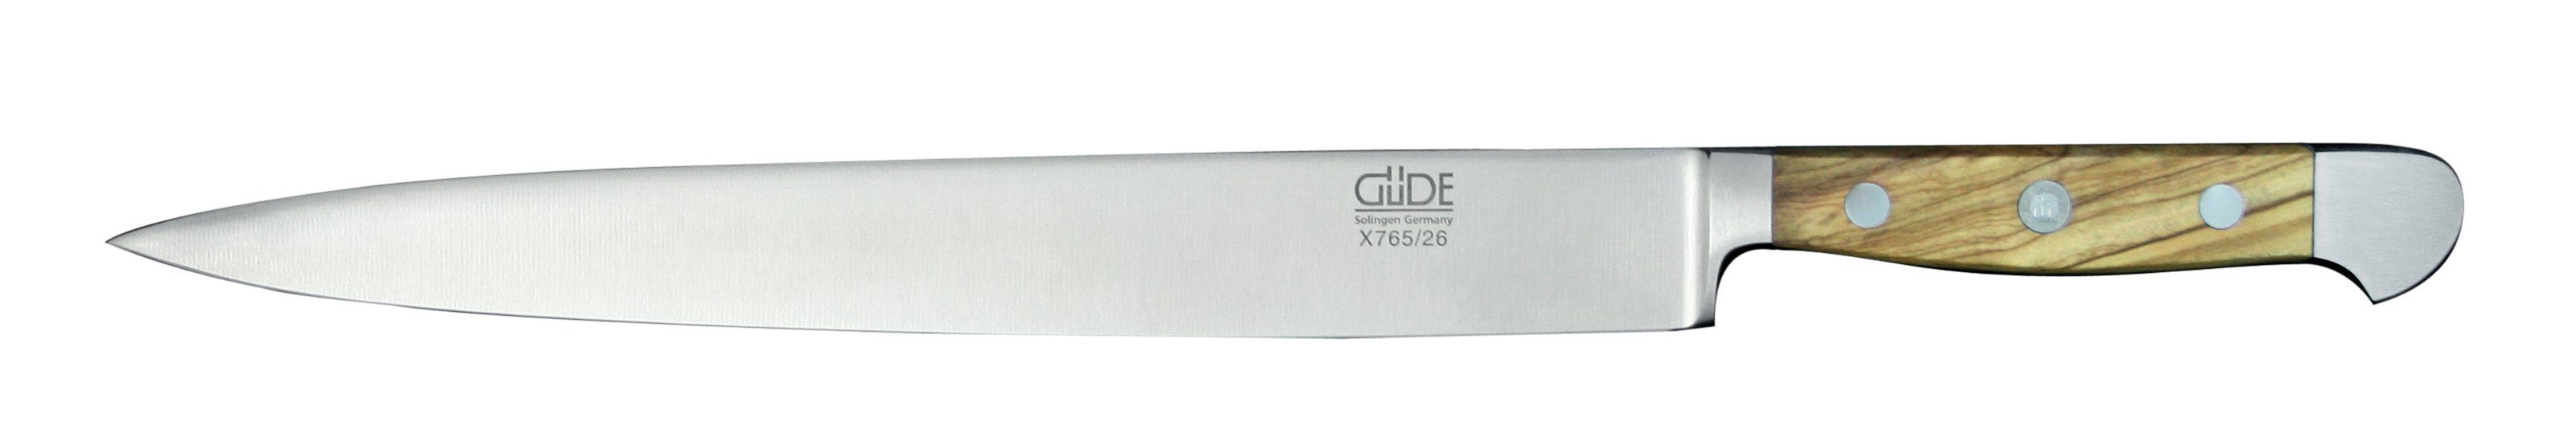 Güde Messer Solingen Schale Alpha Olive, Messerstahl, Schinkenmesser 26 cm - CVM-Messerstahl - Griffschalen Olivenholz | Schinkenmesser